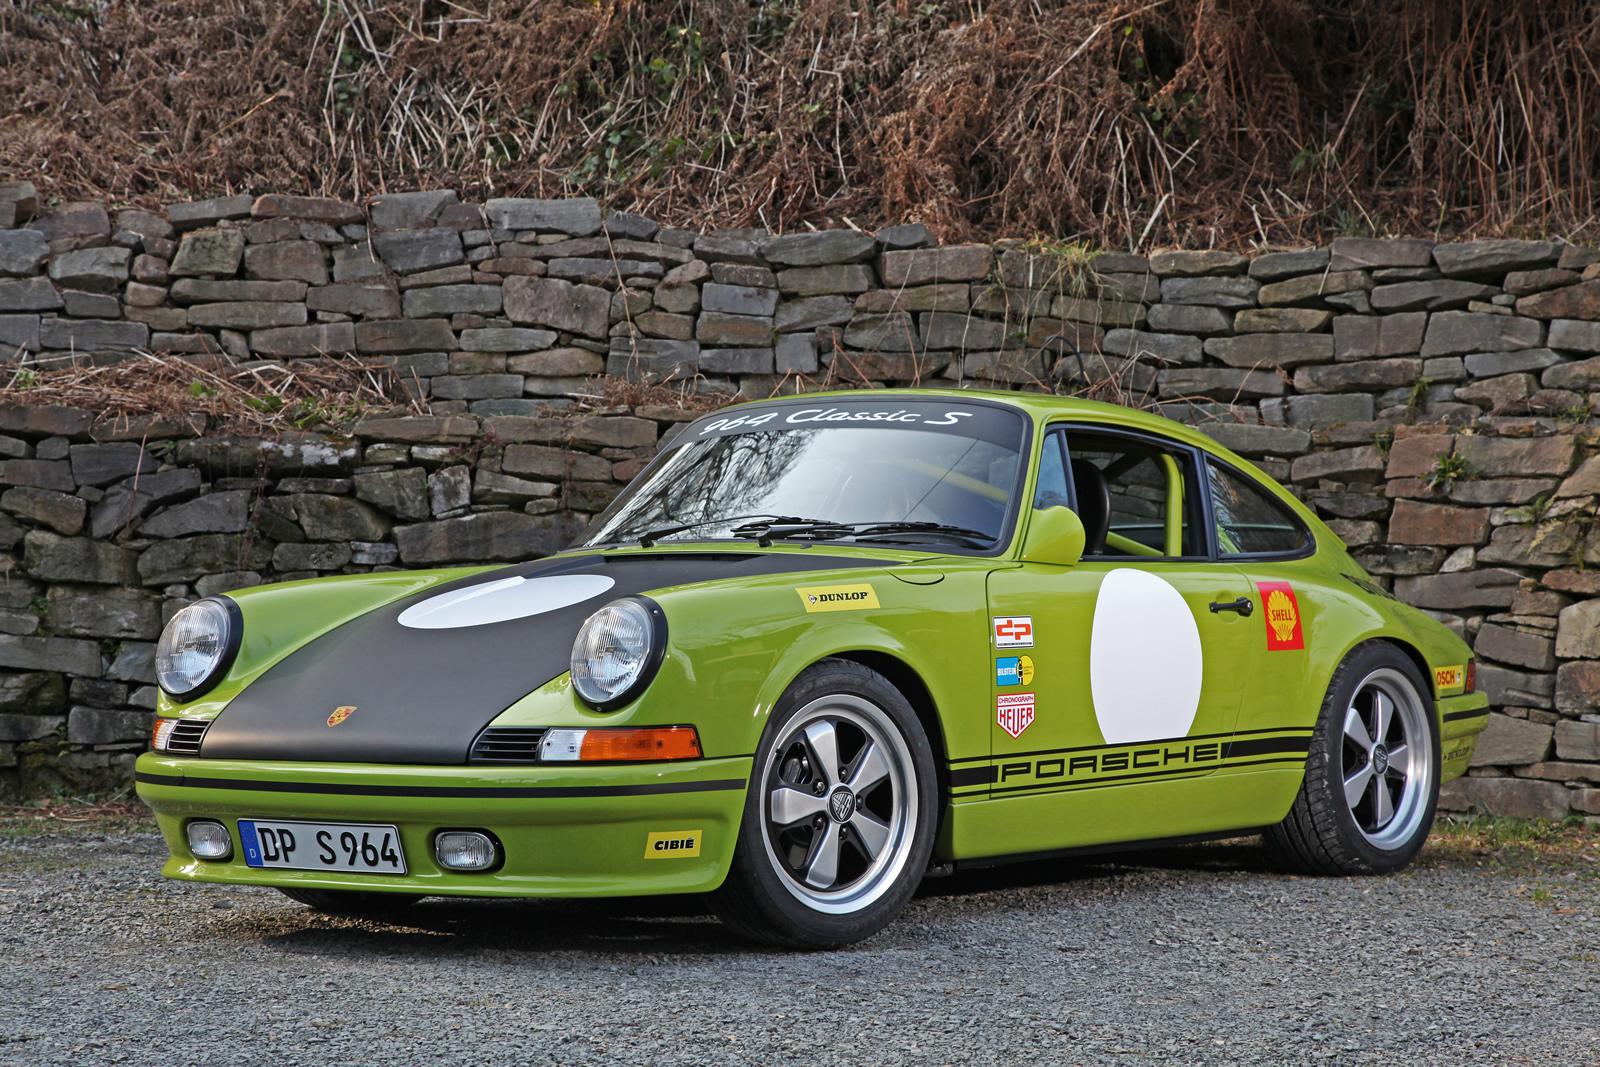 DP Motorsports creates another cool Porsche 911